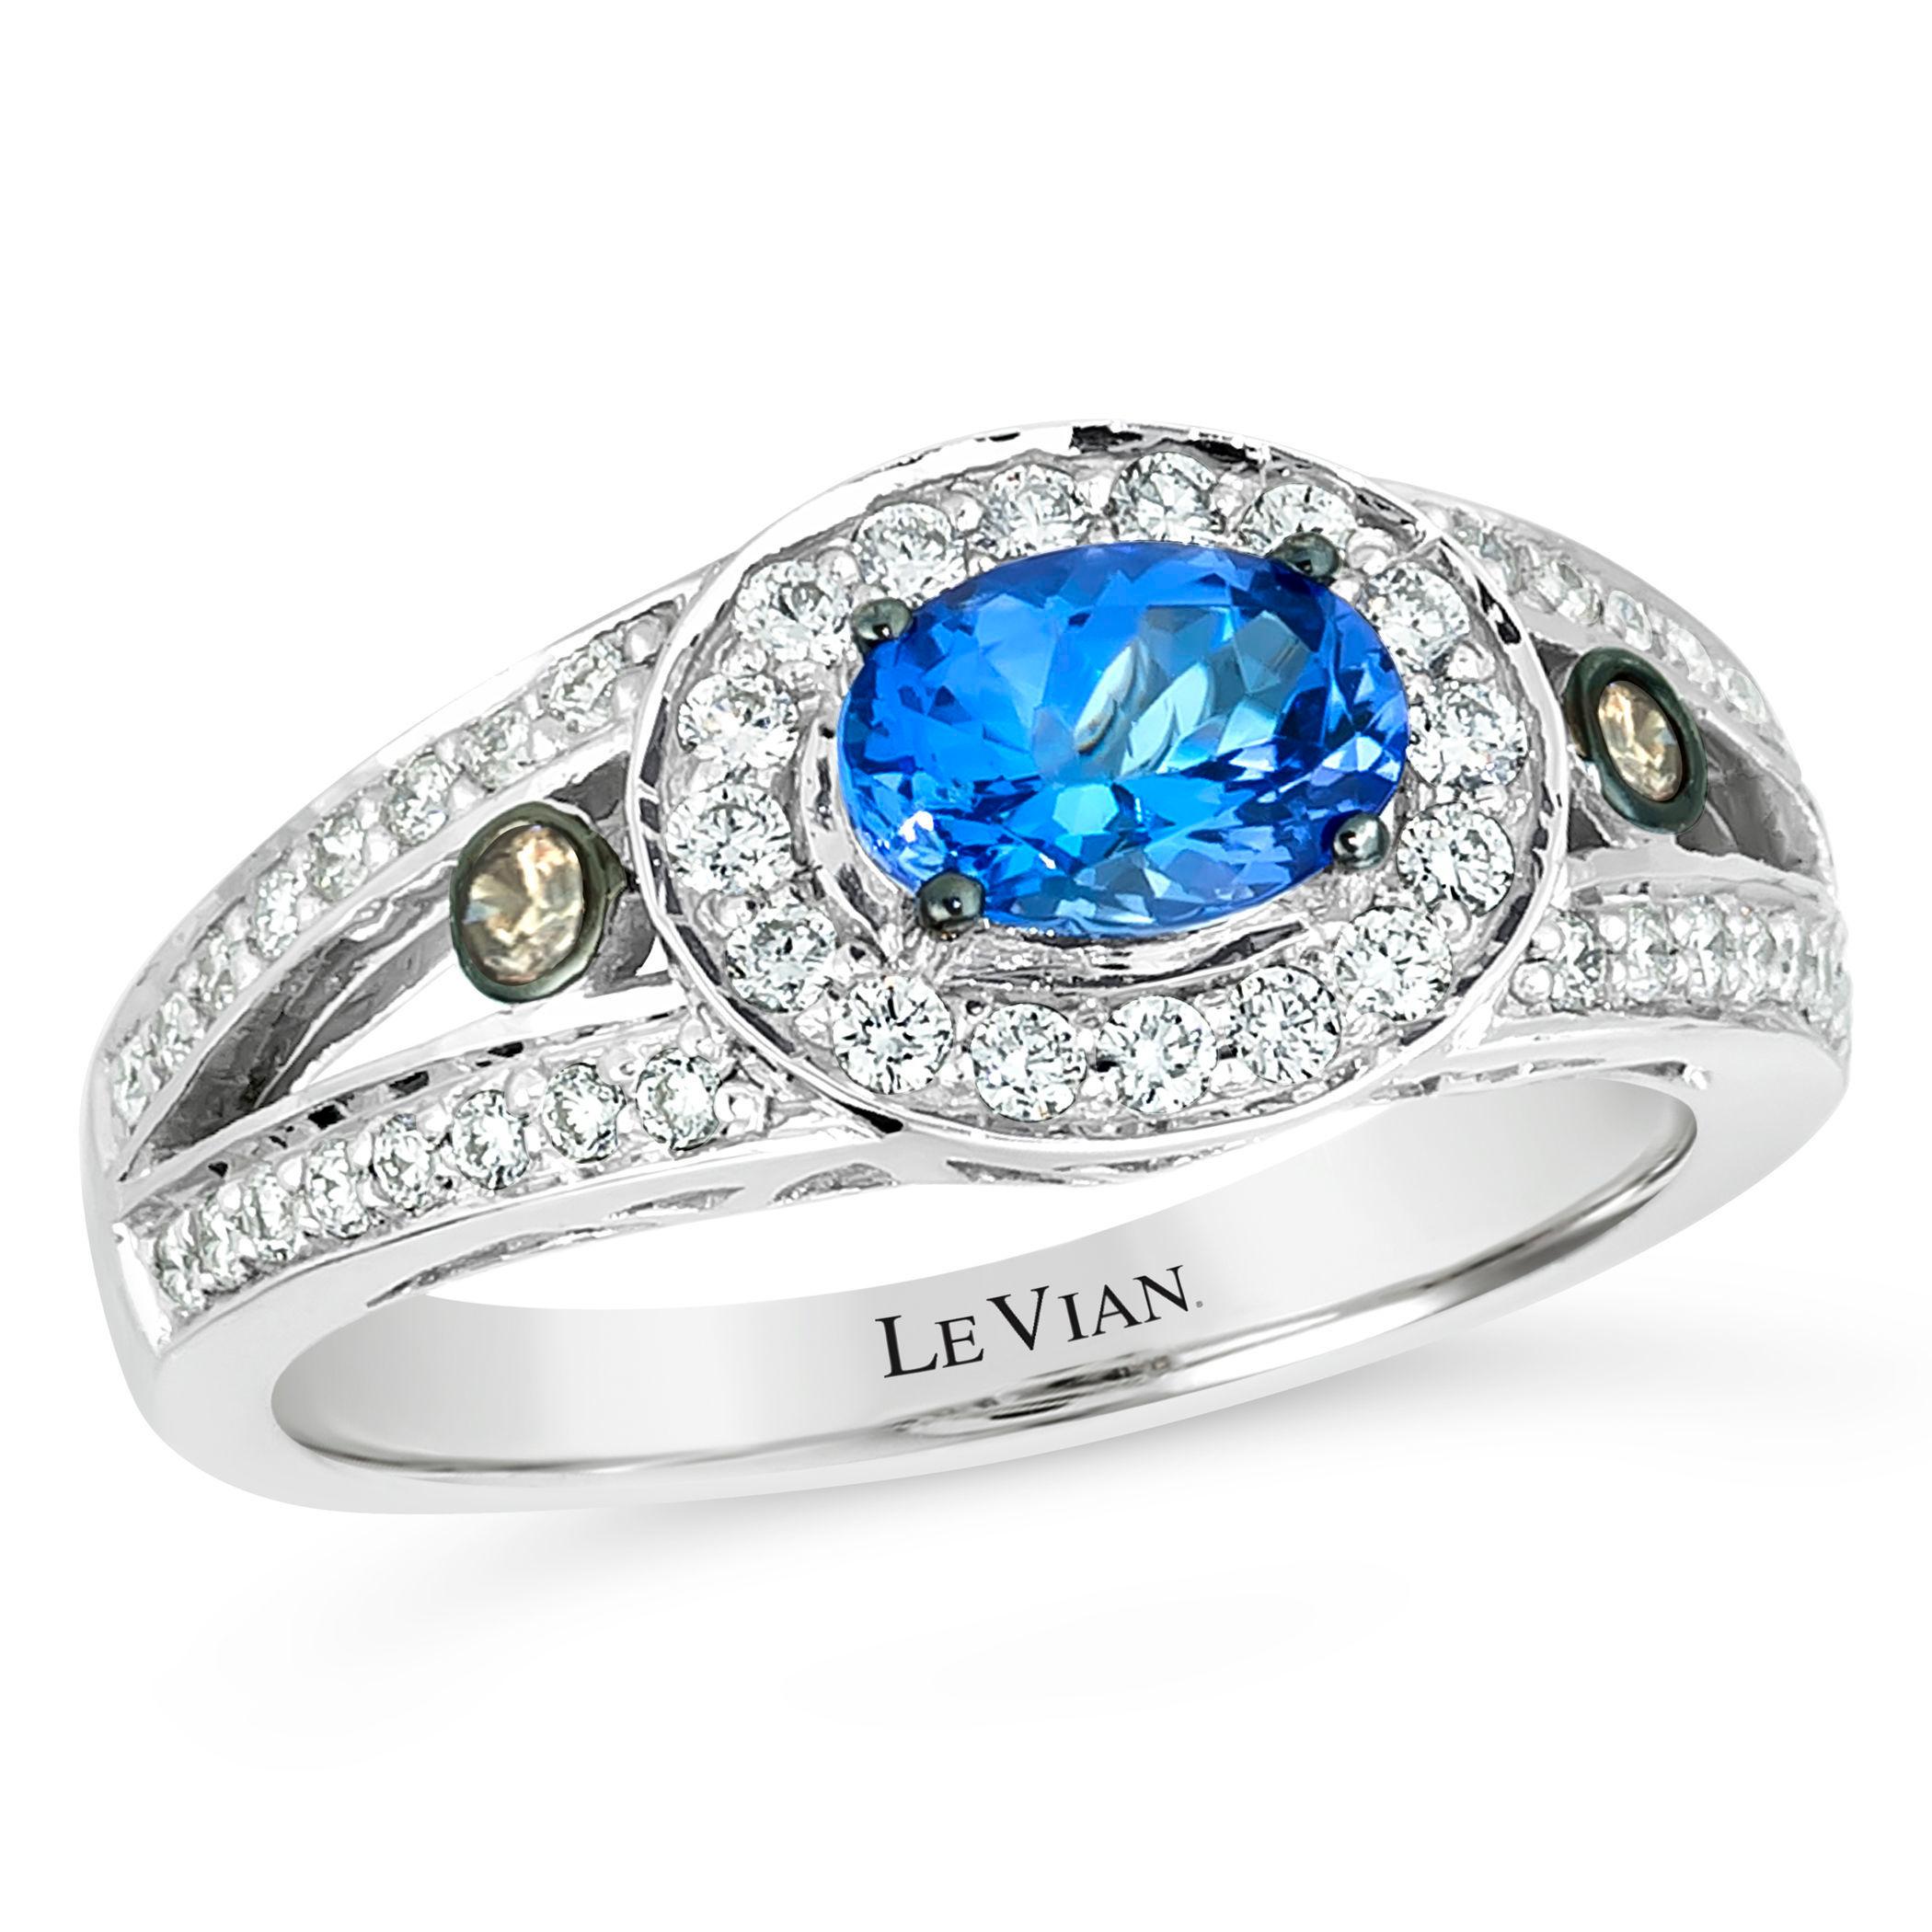 LeVian 14K Gold, Oval Gem White/Chocolate Diamond Engagement Ring - Size 7.75